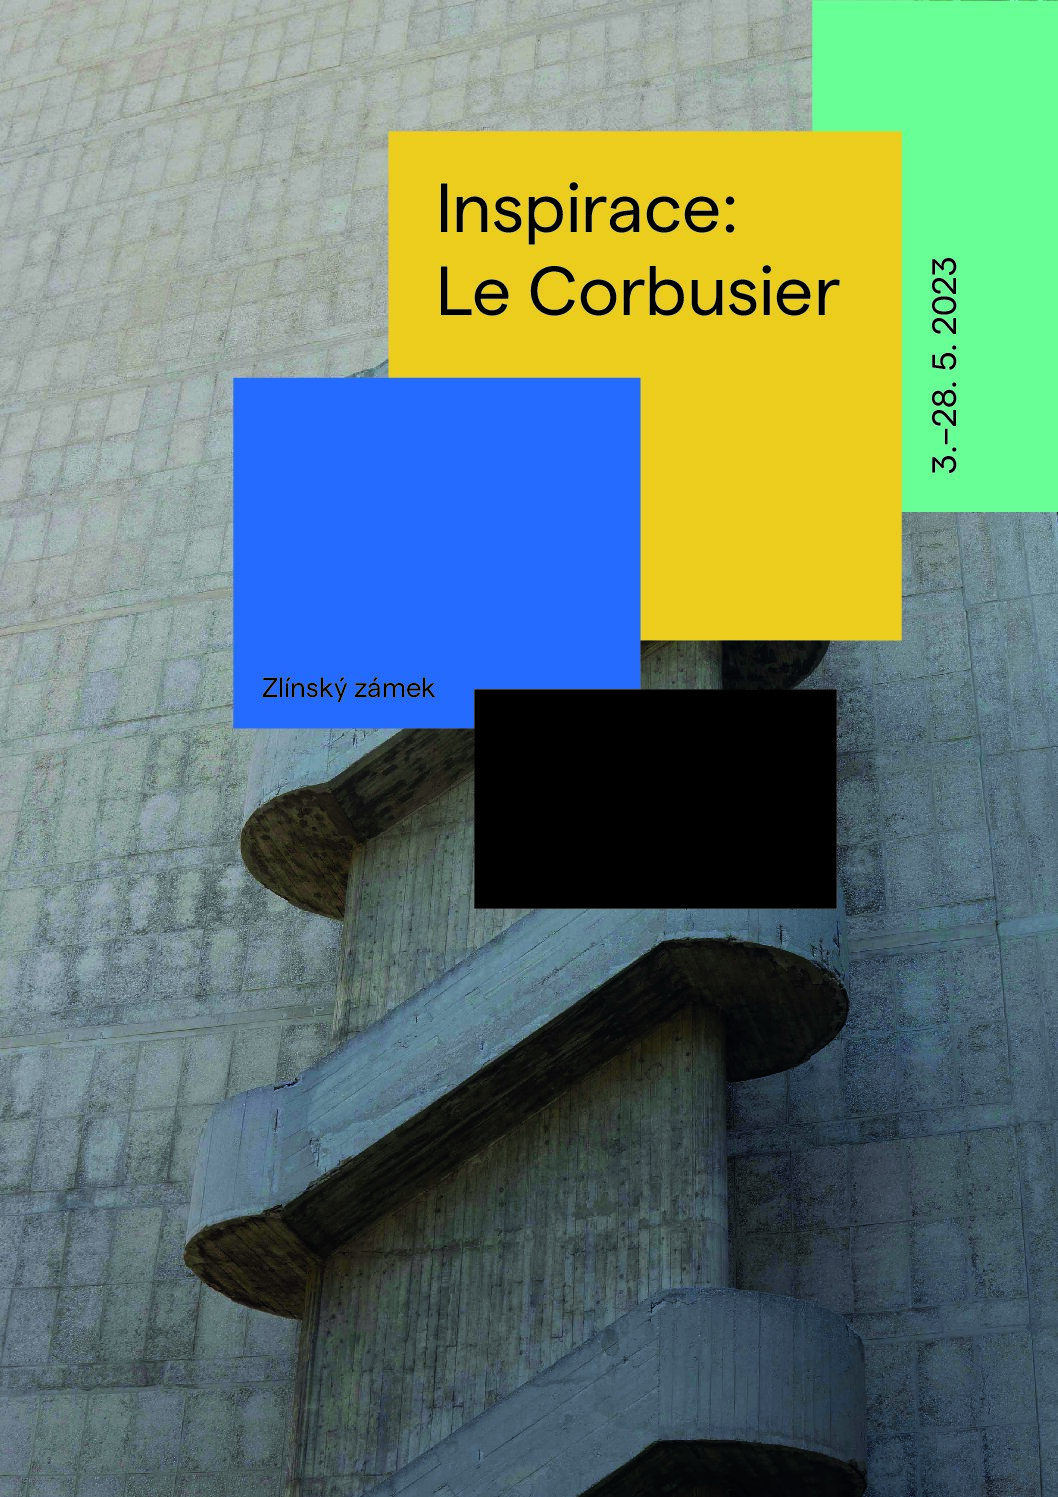 The Exhibition Inspiration: Le Corbusier